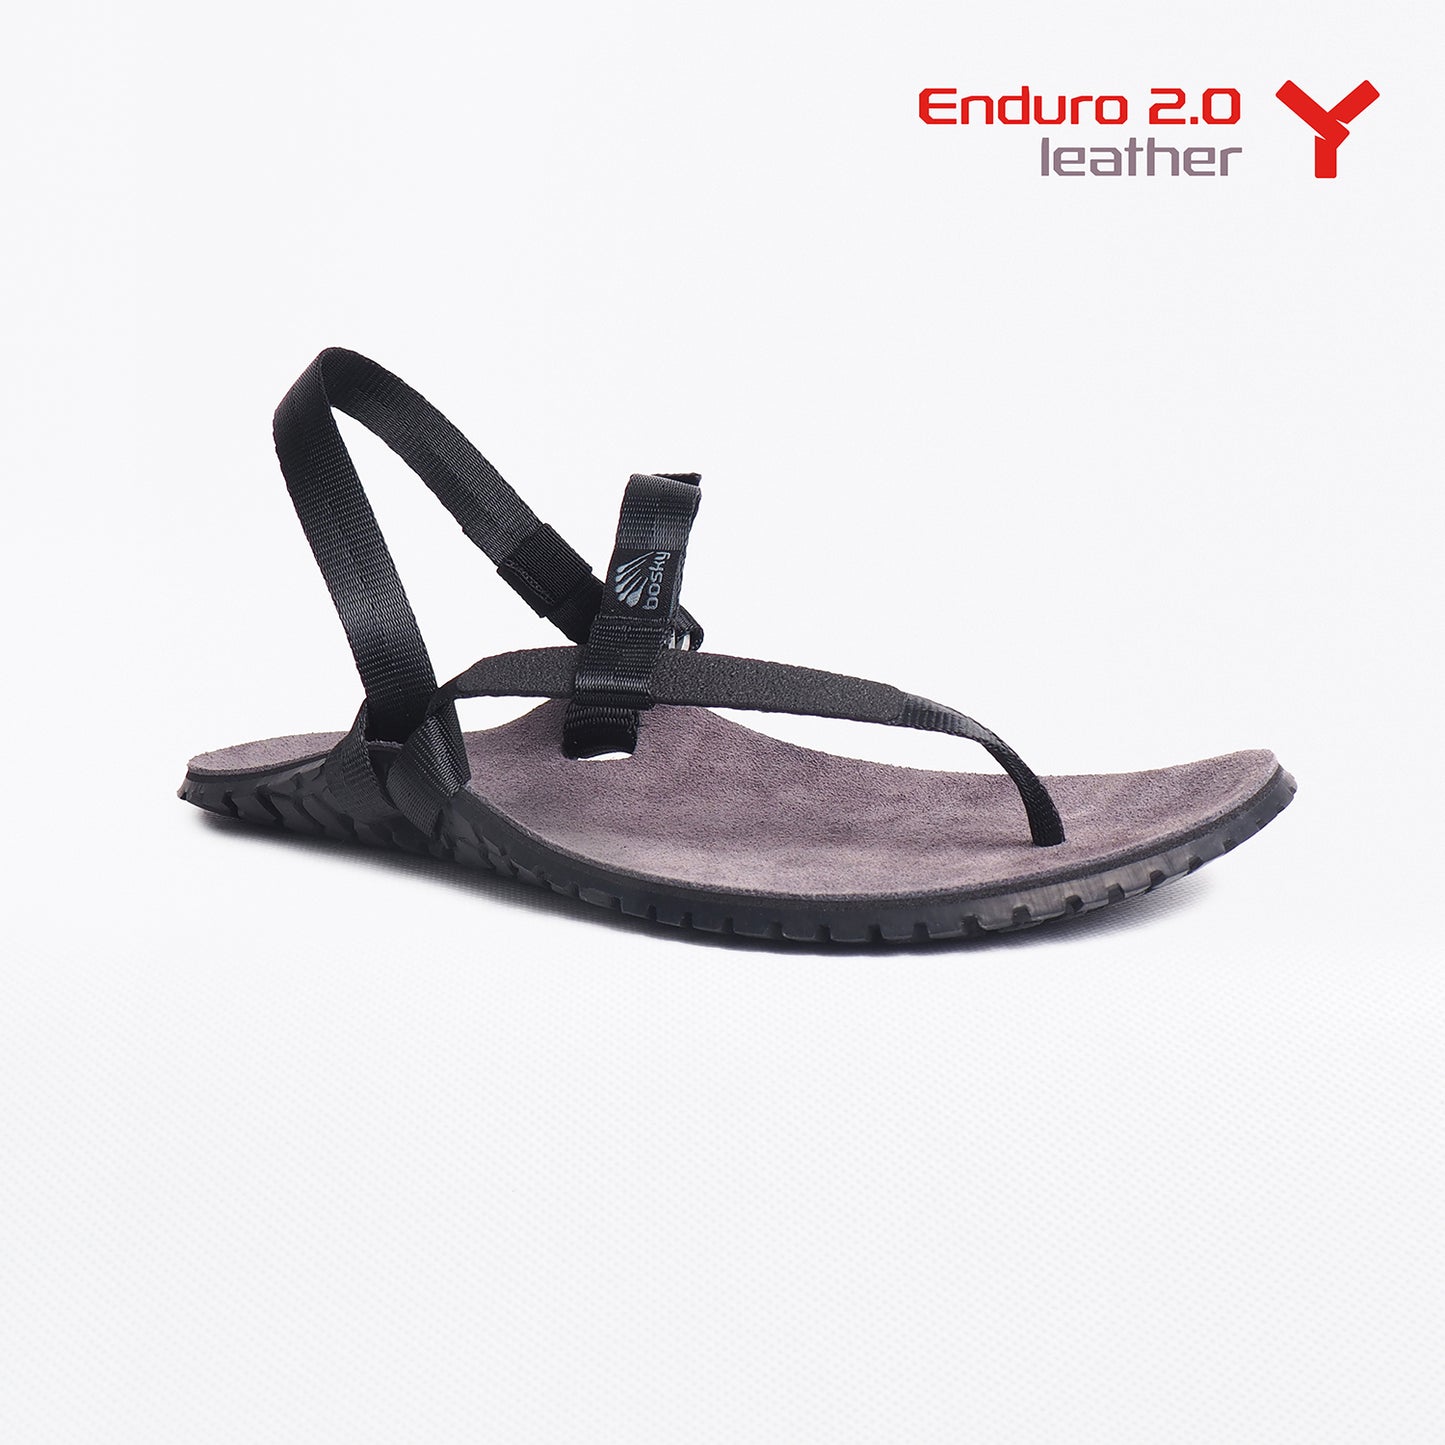 Bosky Enduro Leather 2.0 Y Sandal